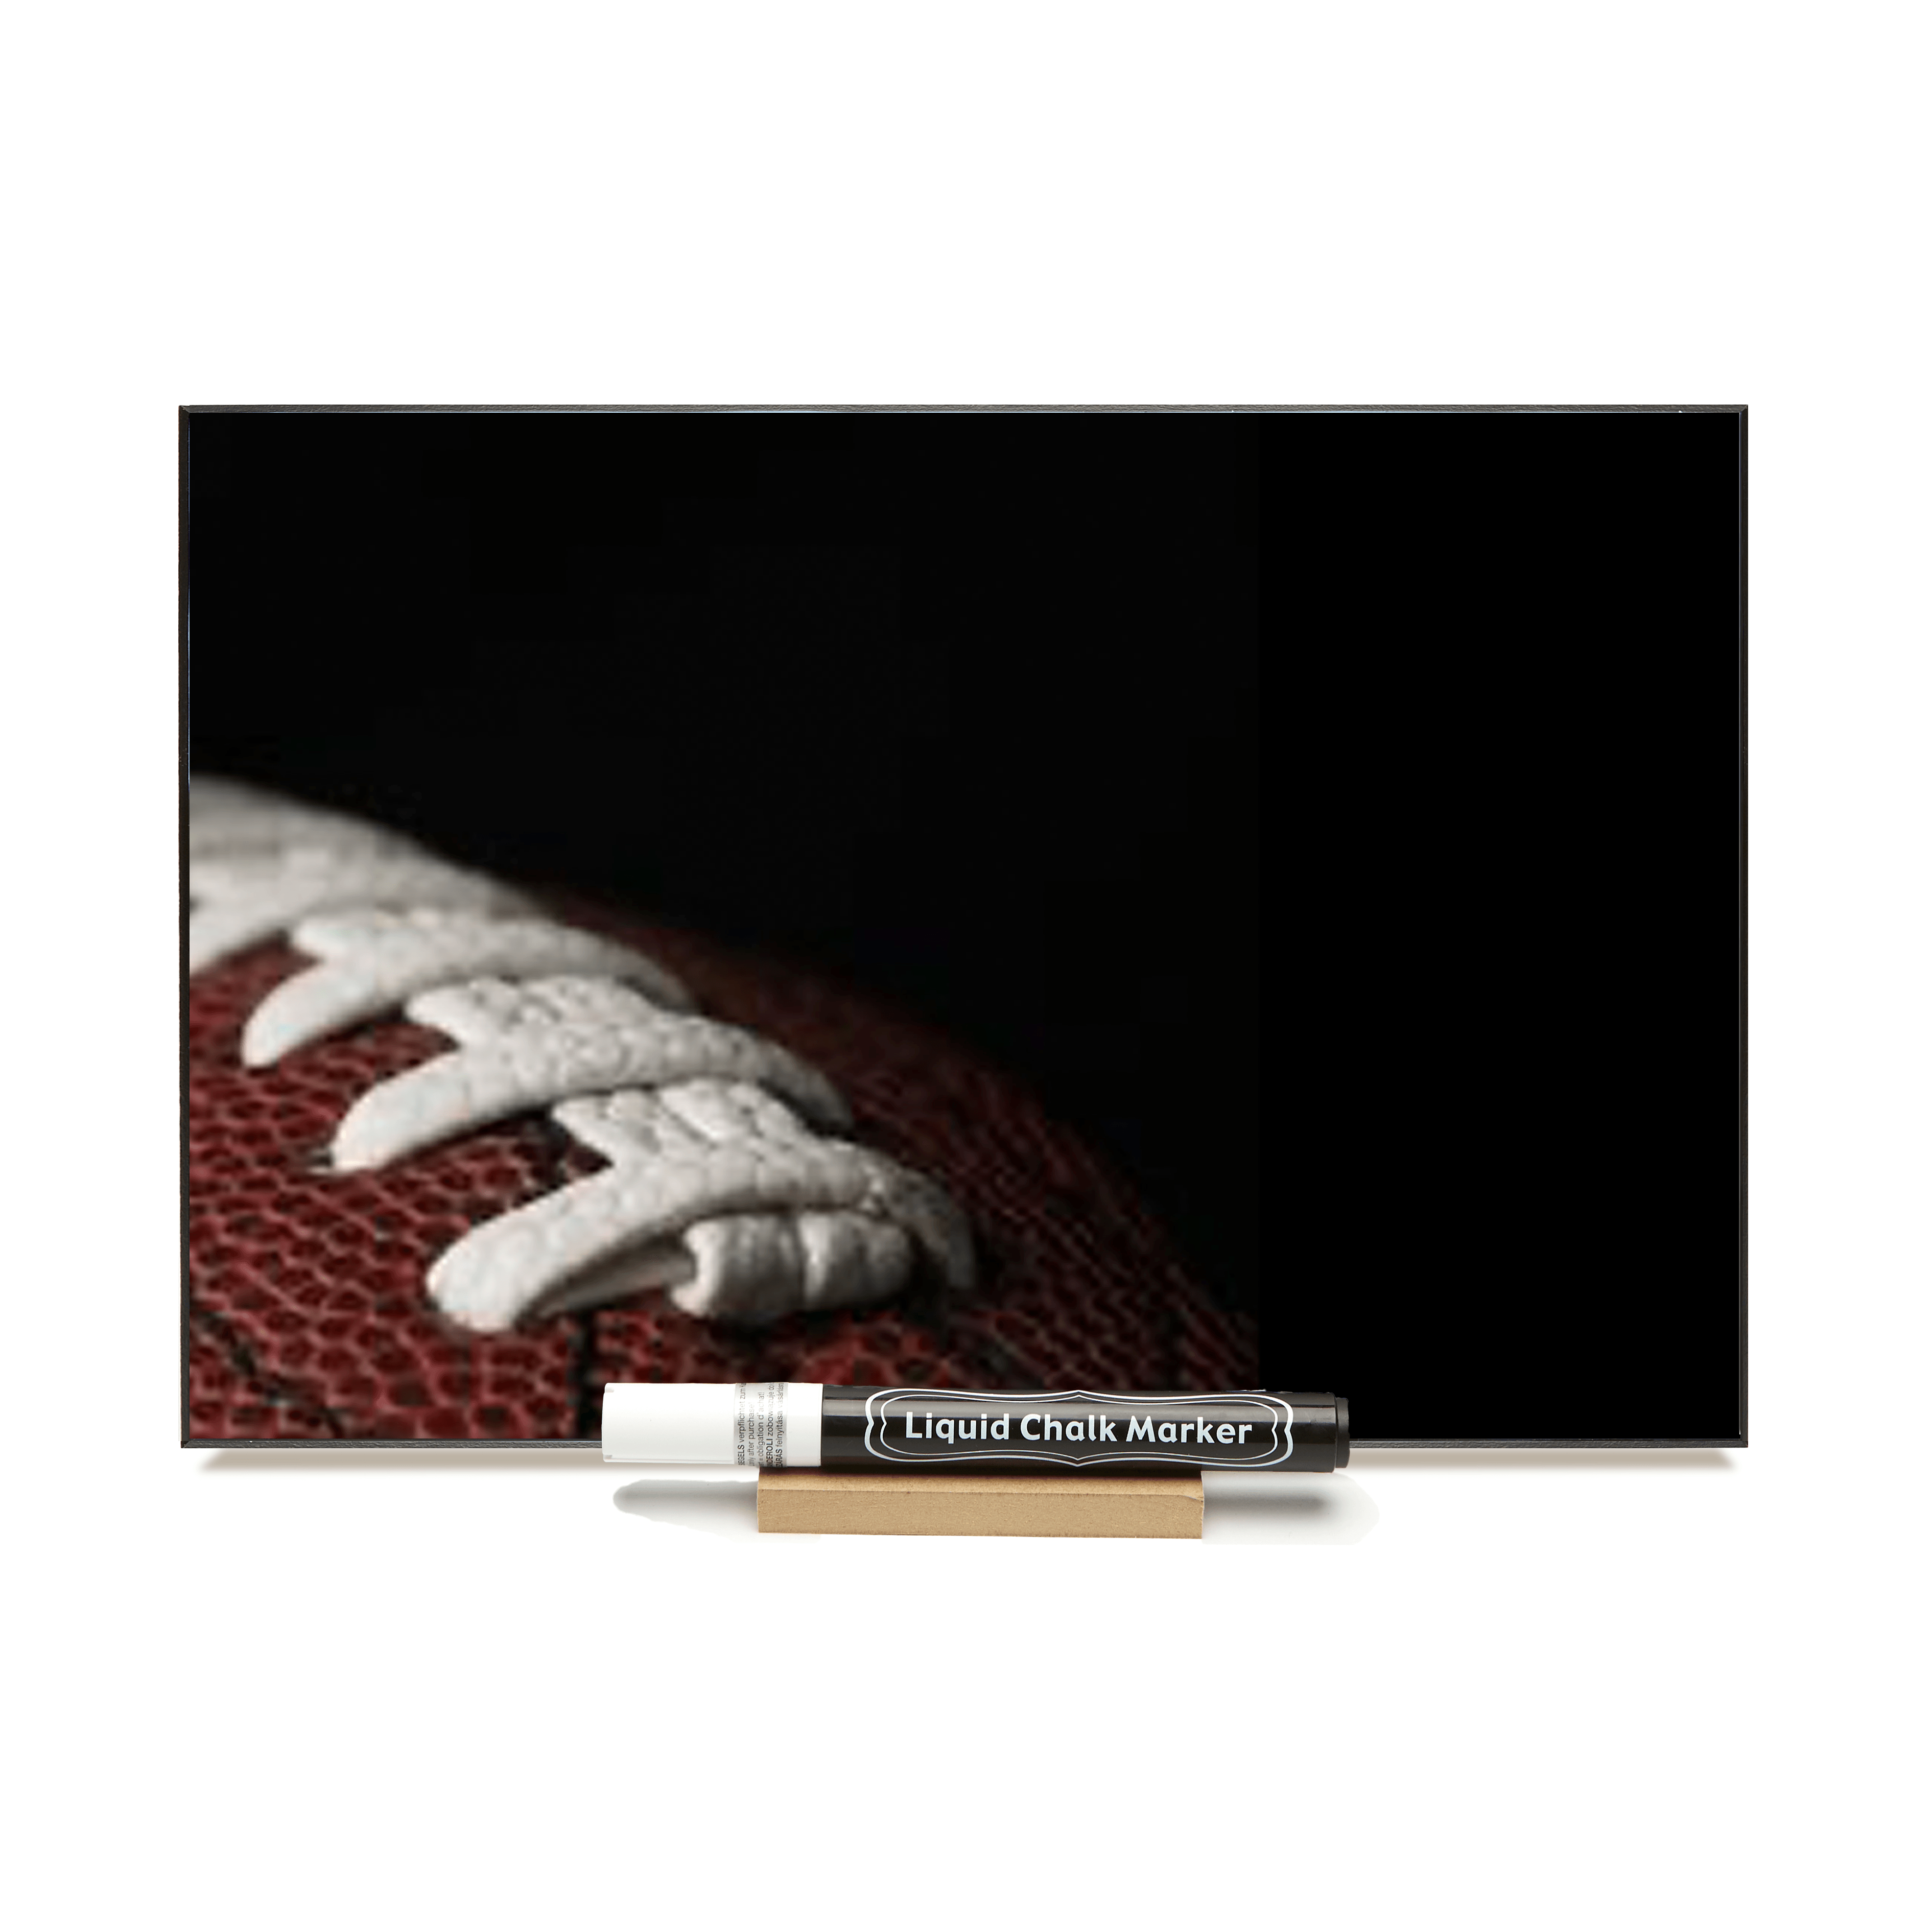 "Football" PHOTO CHALKBOARD  Includes Chalkboard, Chalk Marker & Stand